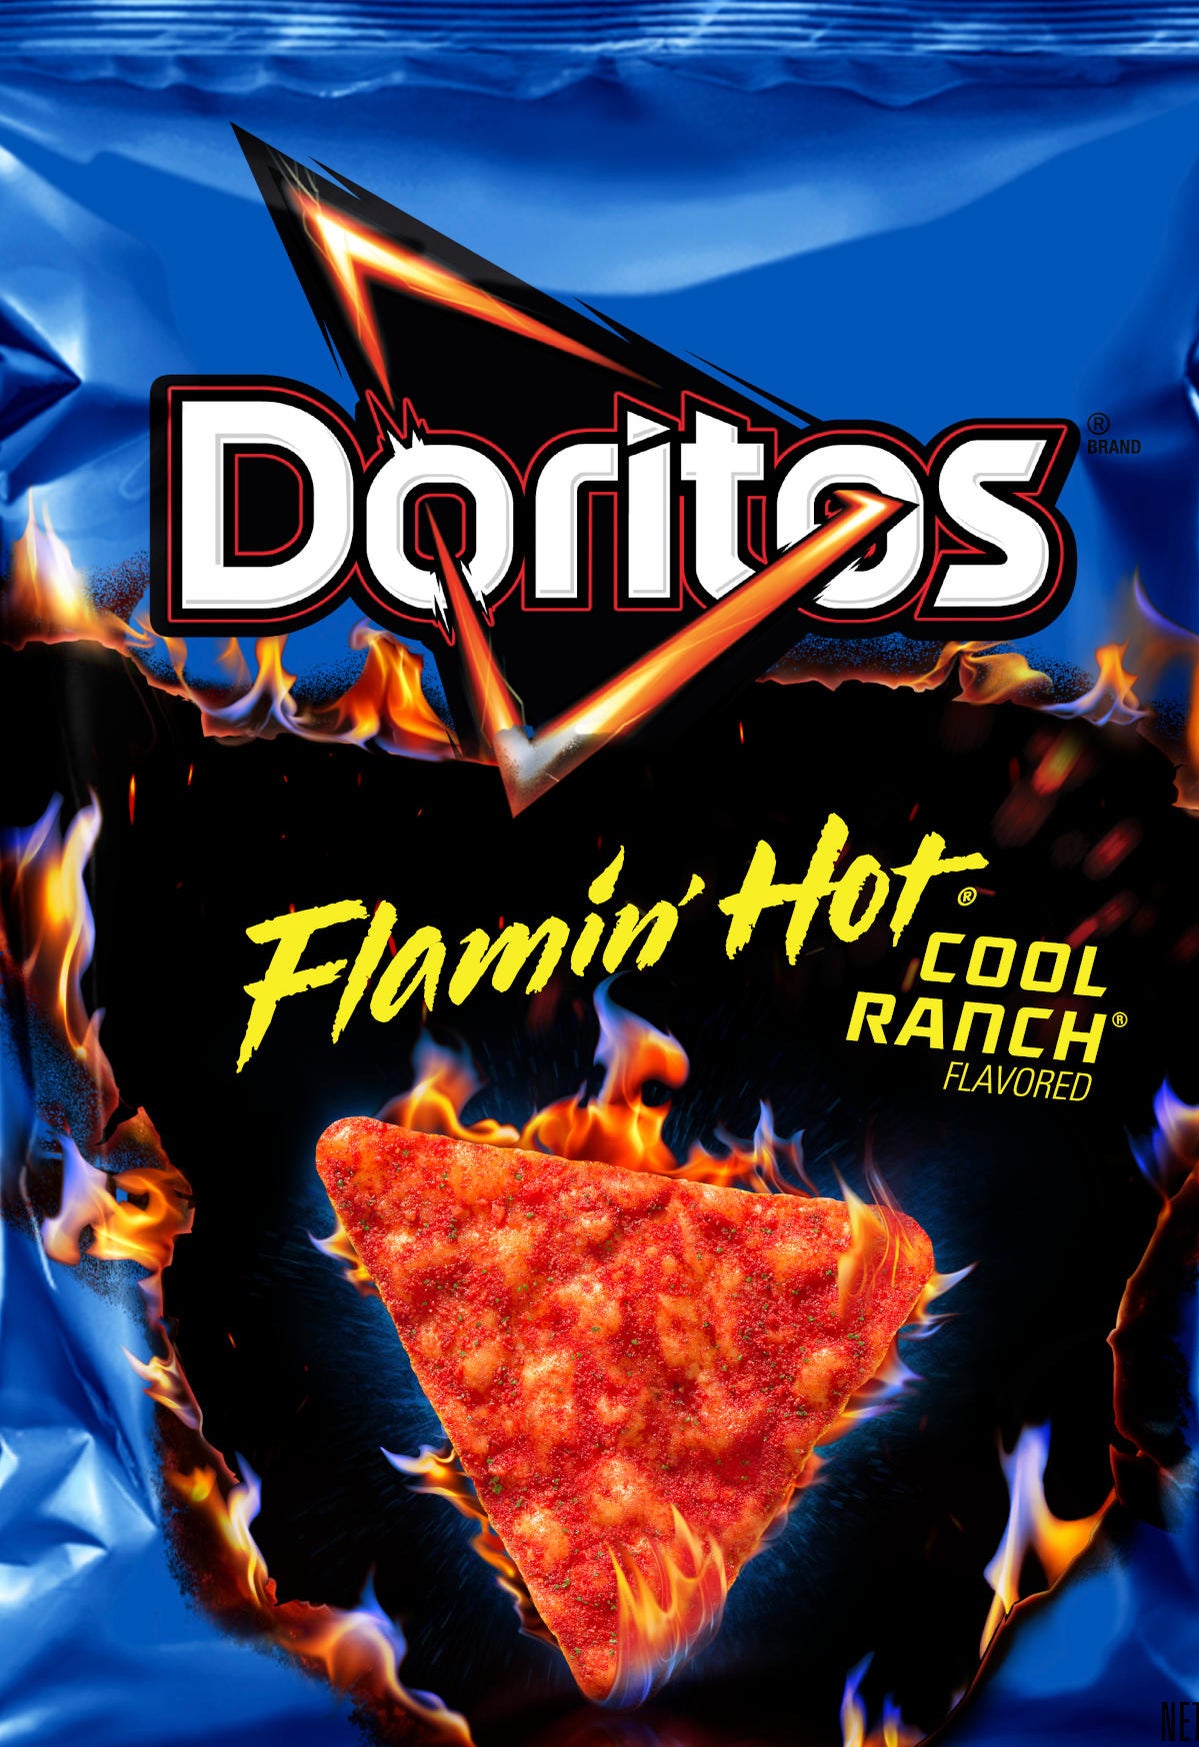 DORITOS Flamin Hot Cool Ranch